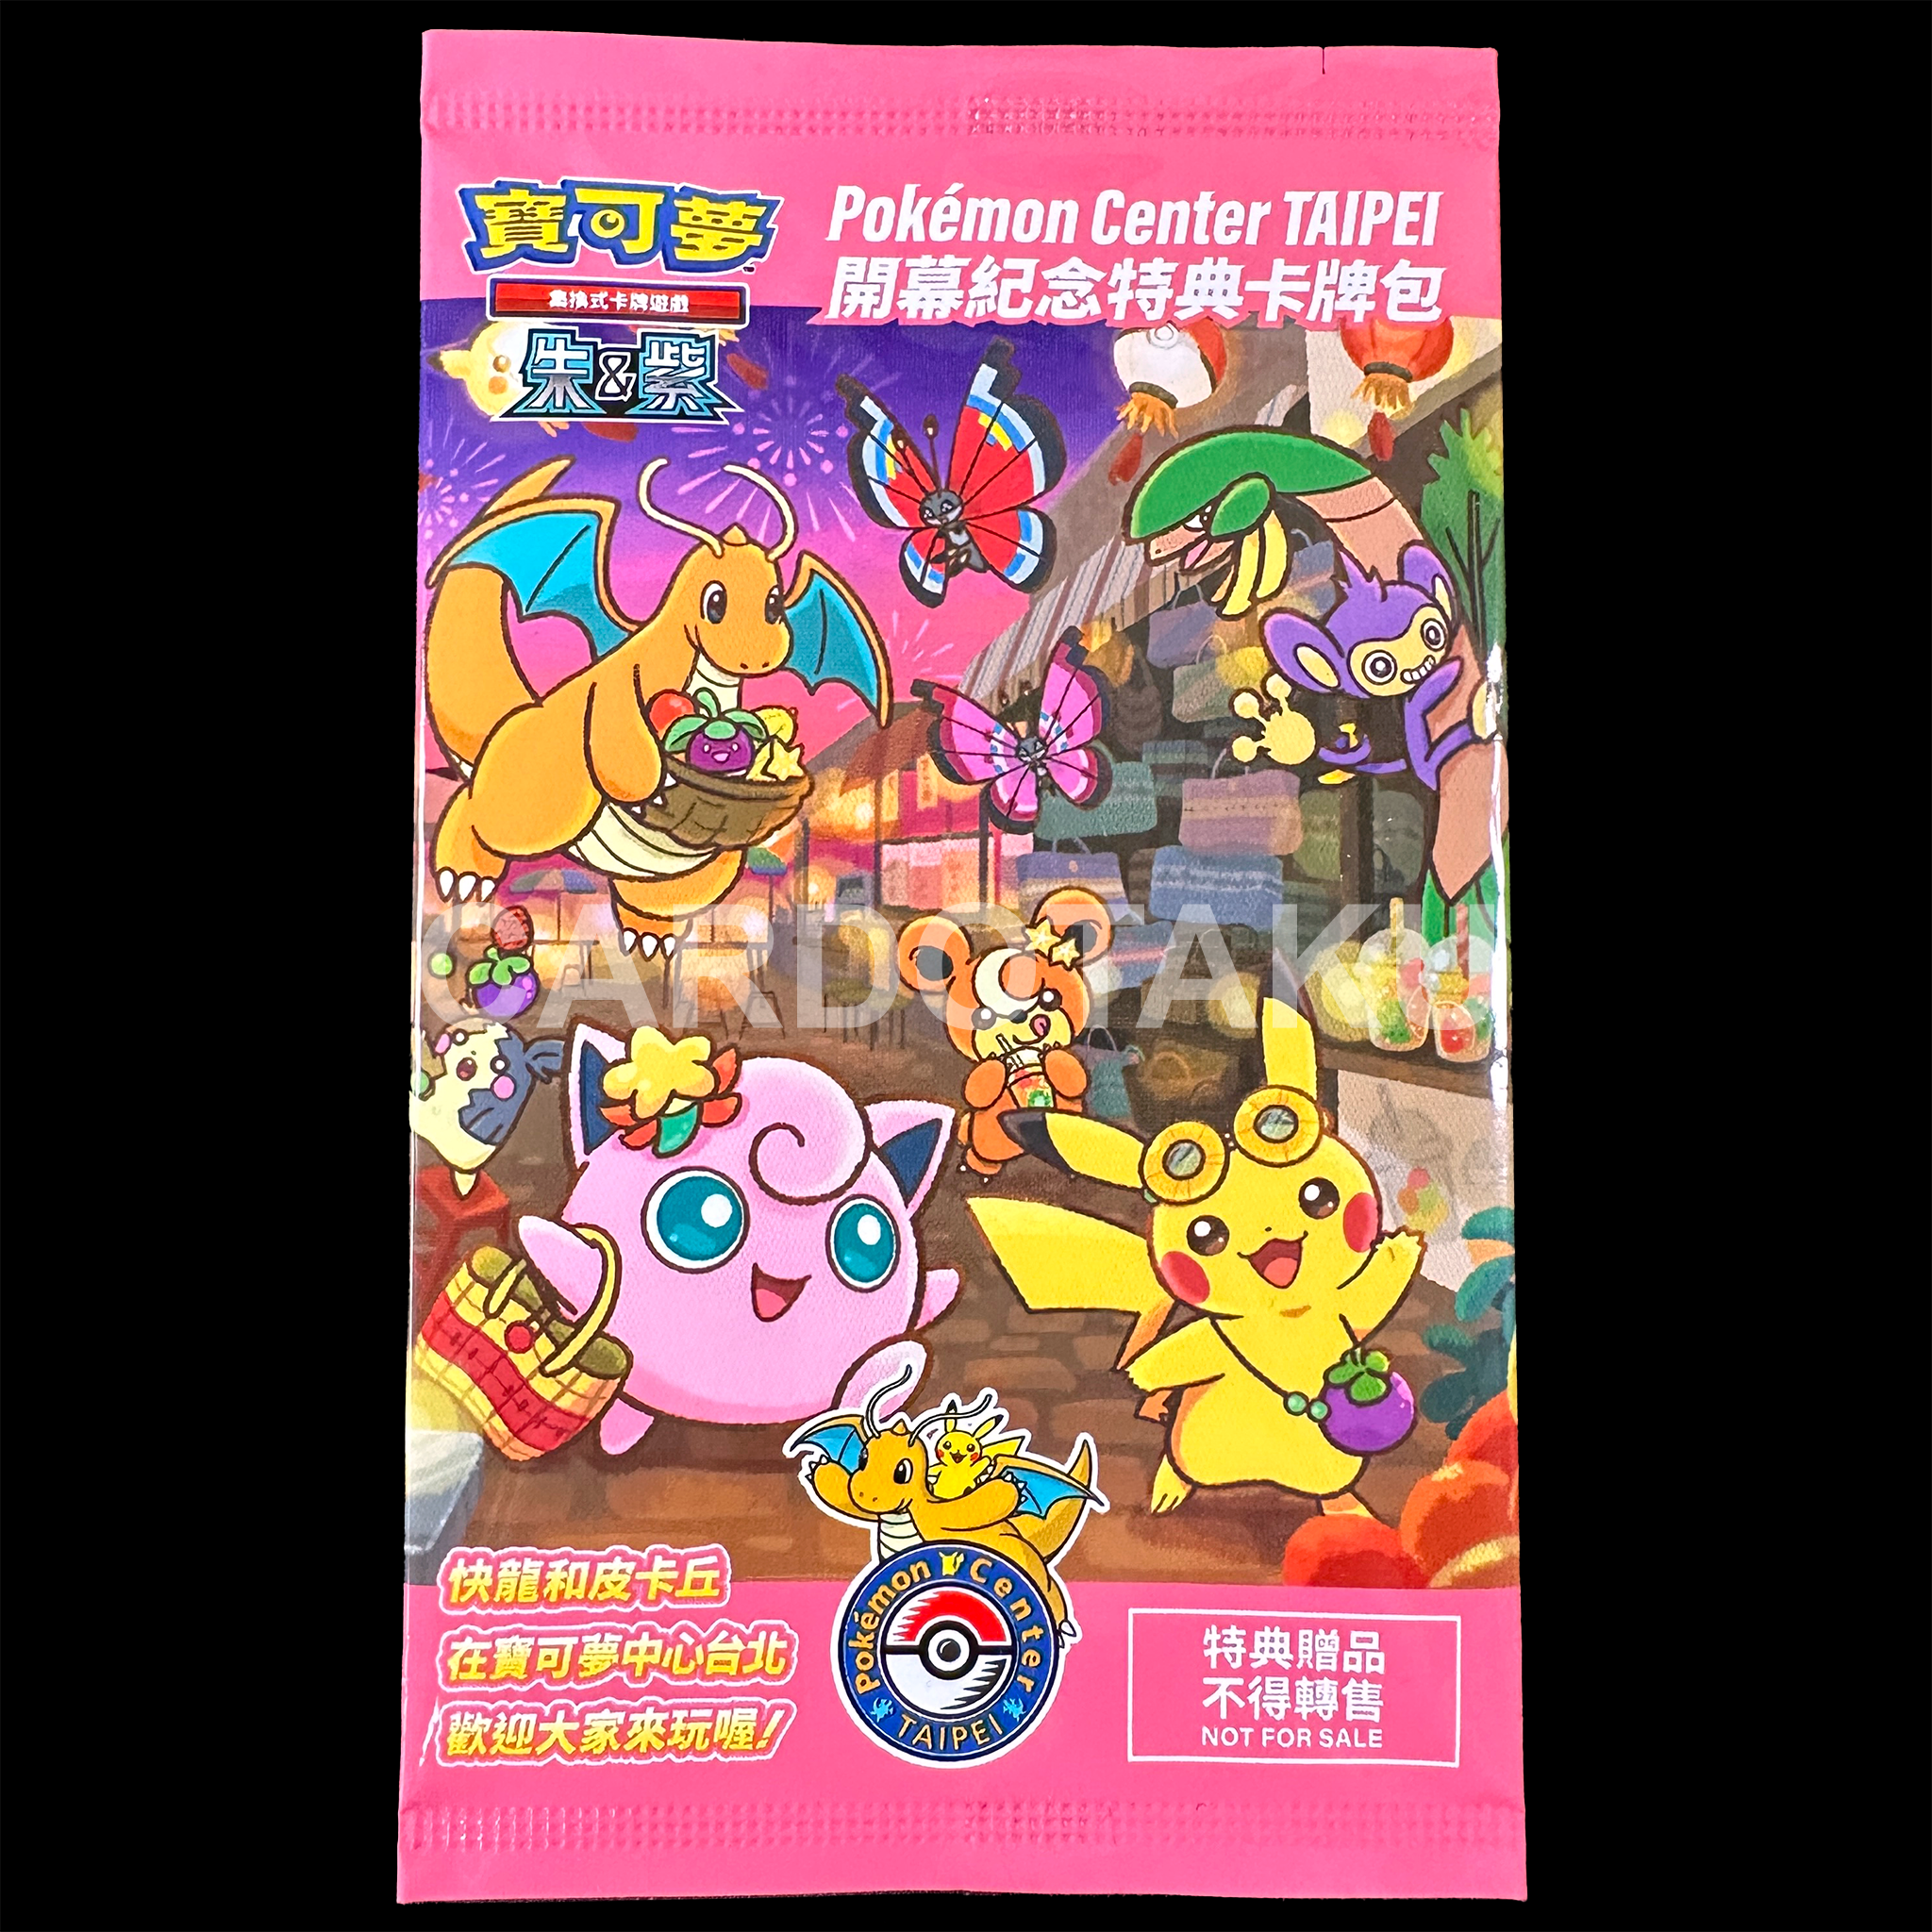 Pokemon Trading Card Game promo 320/S-P Unown V (Rank S)